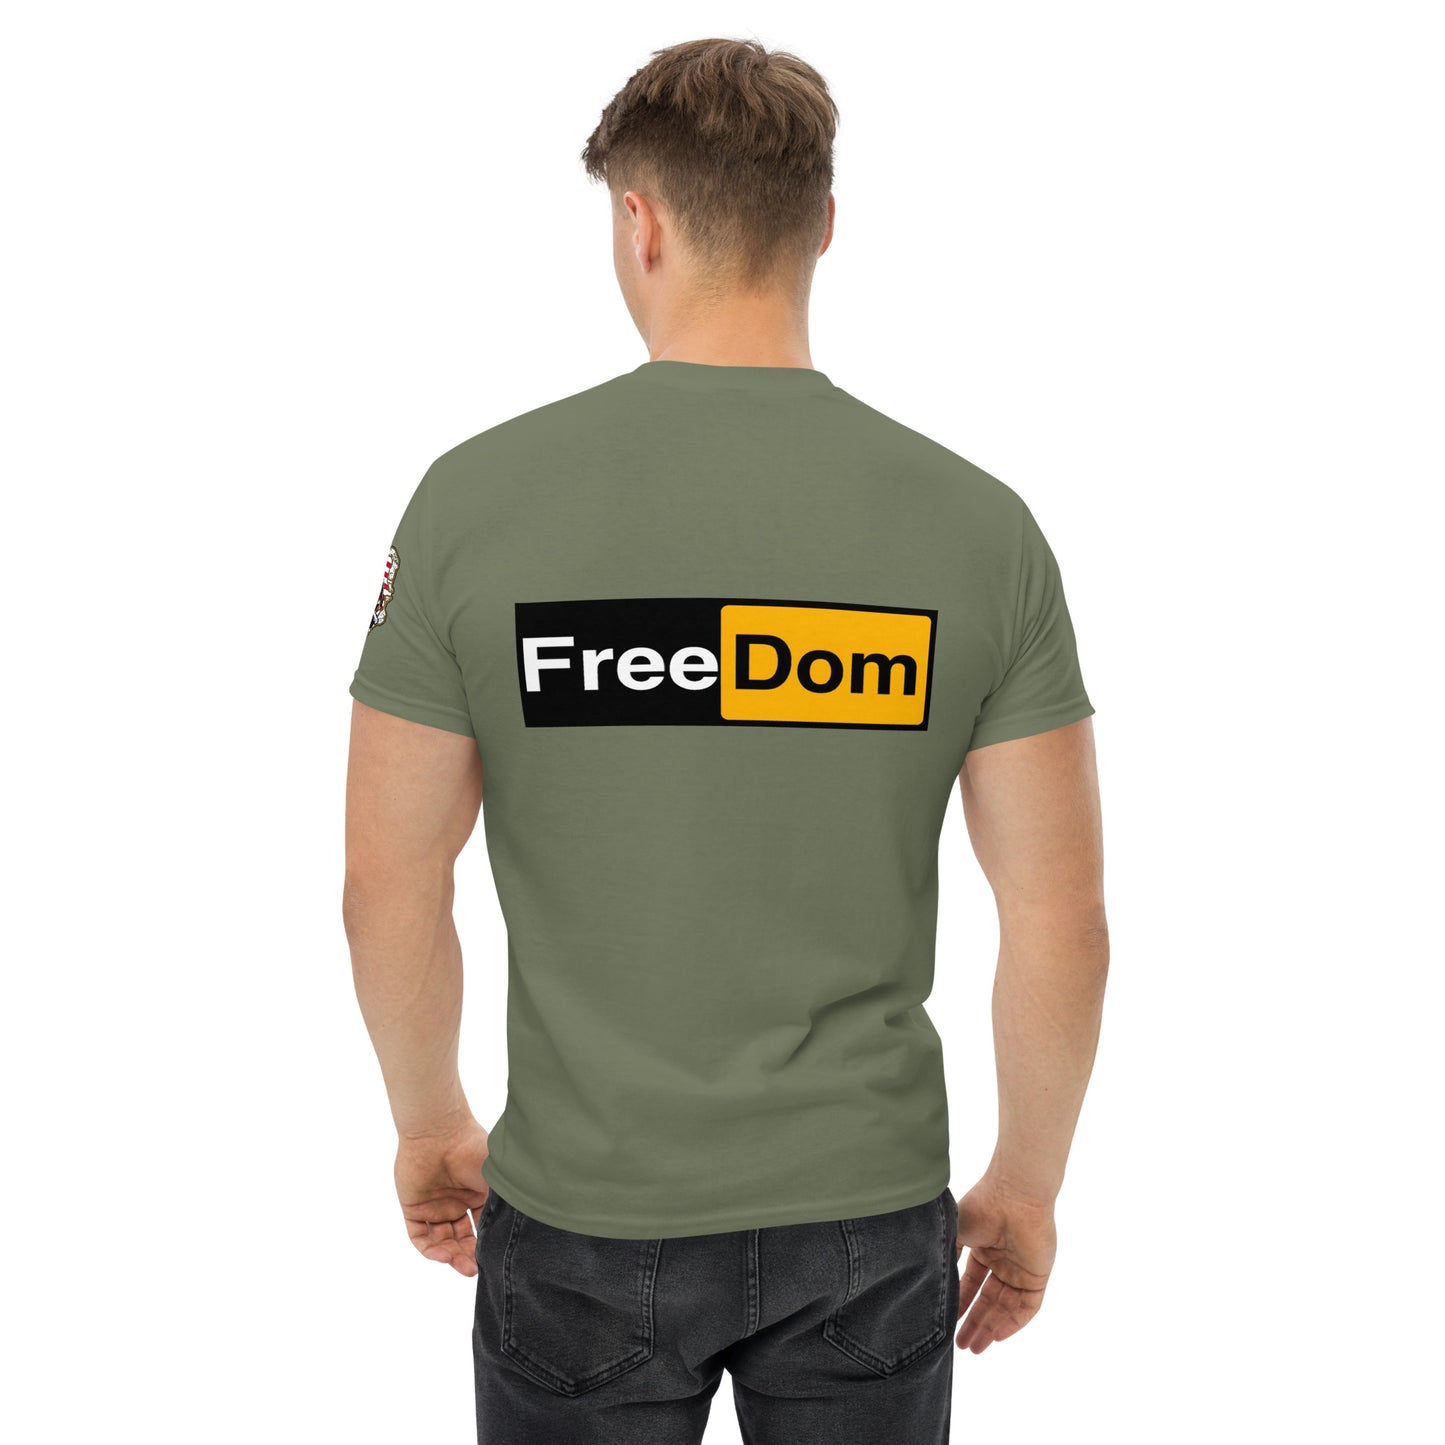 FreeDom